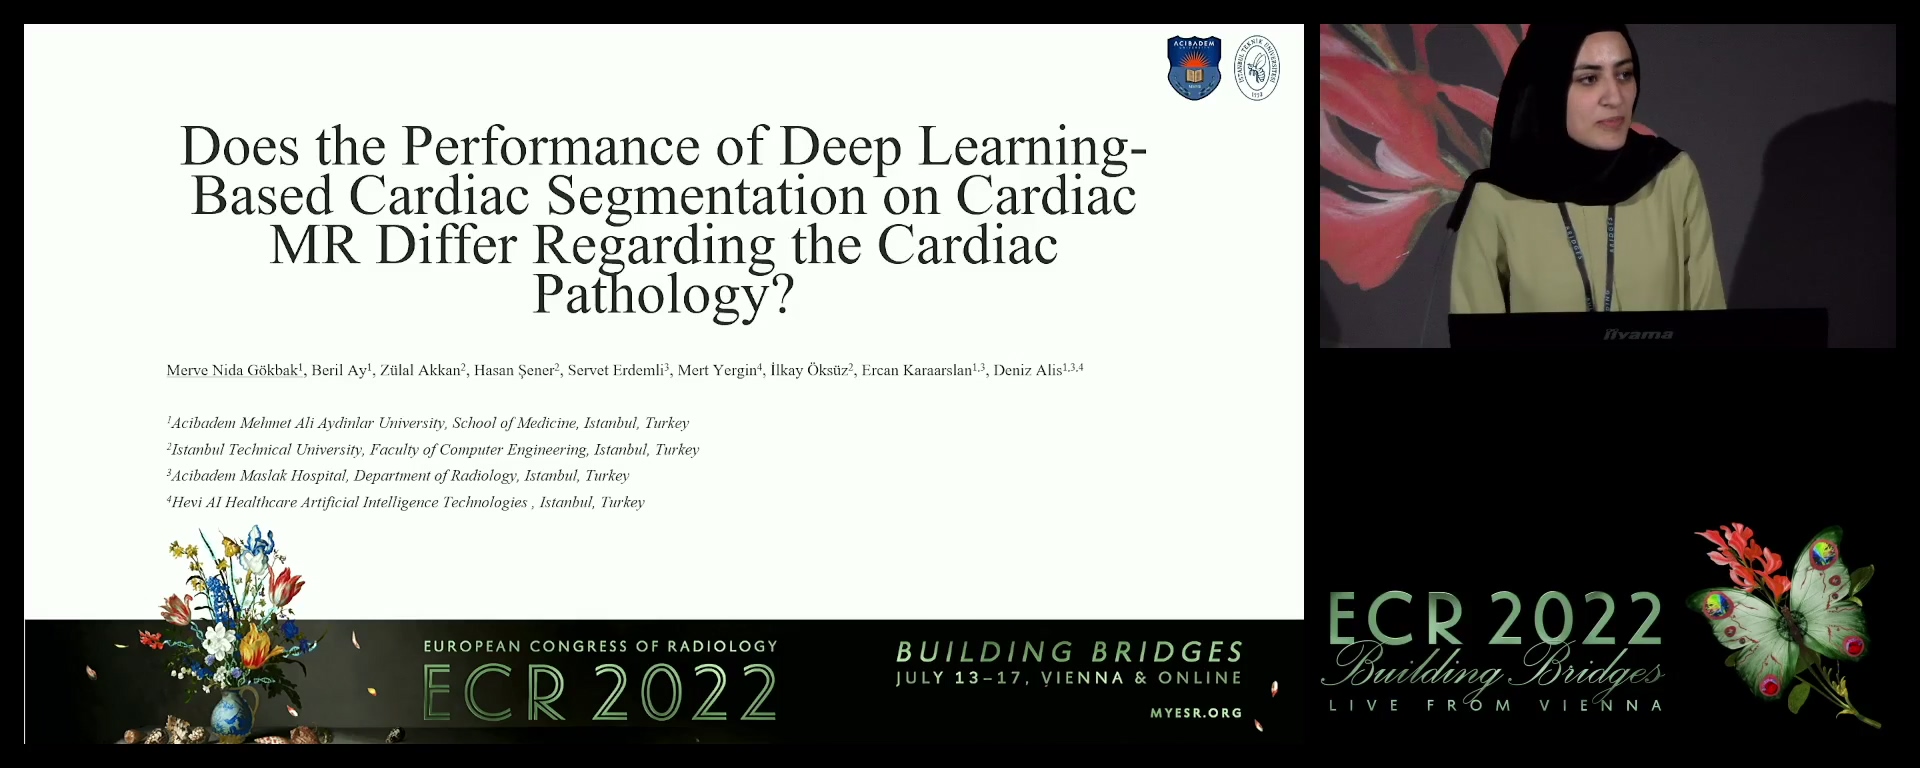 Does the performance of Deep Learning-based cardiac segmentation on cardiac MR differ with regard to cardiac pathology? - Merve Nida Gökbak, Istanbul / TR